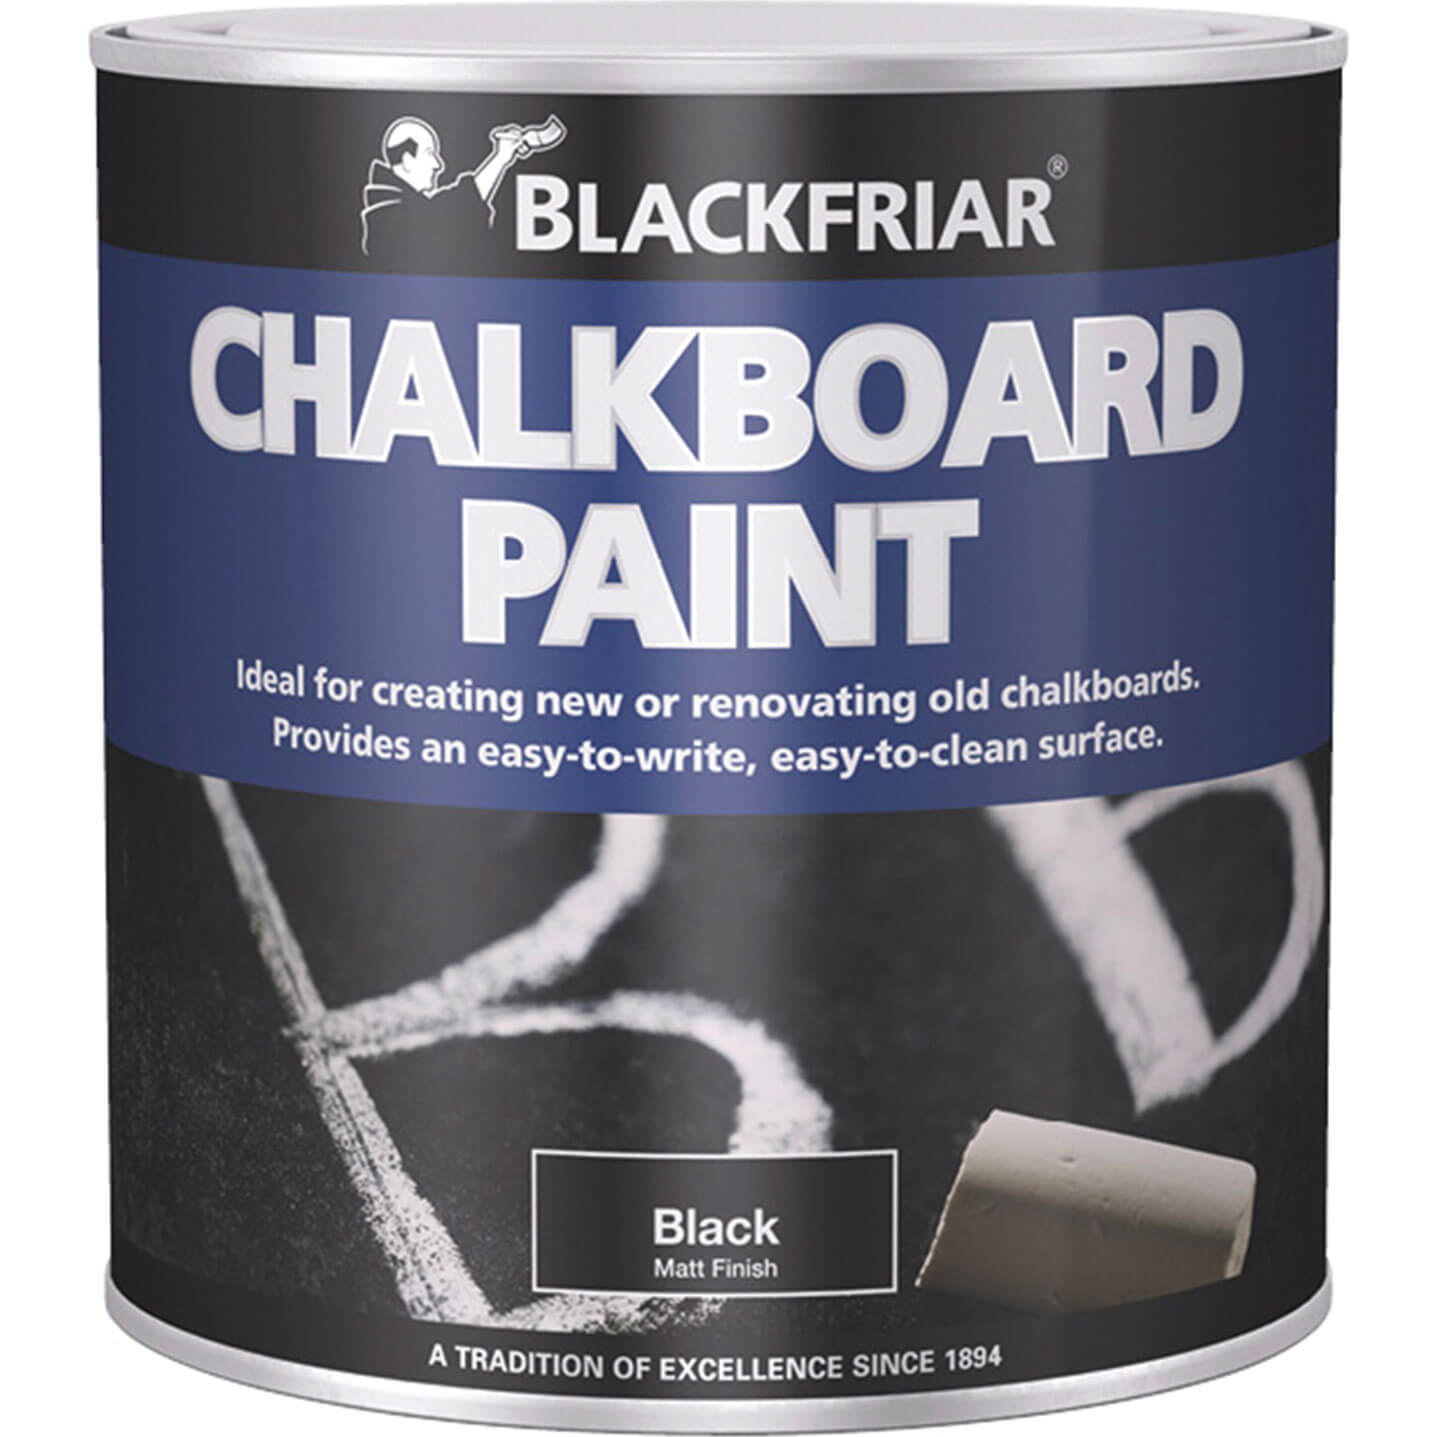 Image of Blackfriar Chalkboard Paint for Renovating or Creating Chalkboards Black 500ml